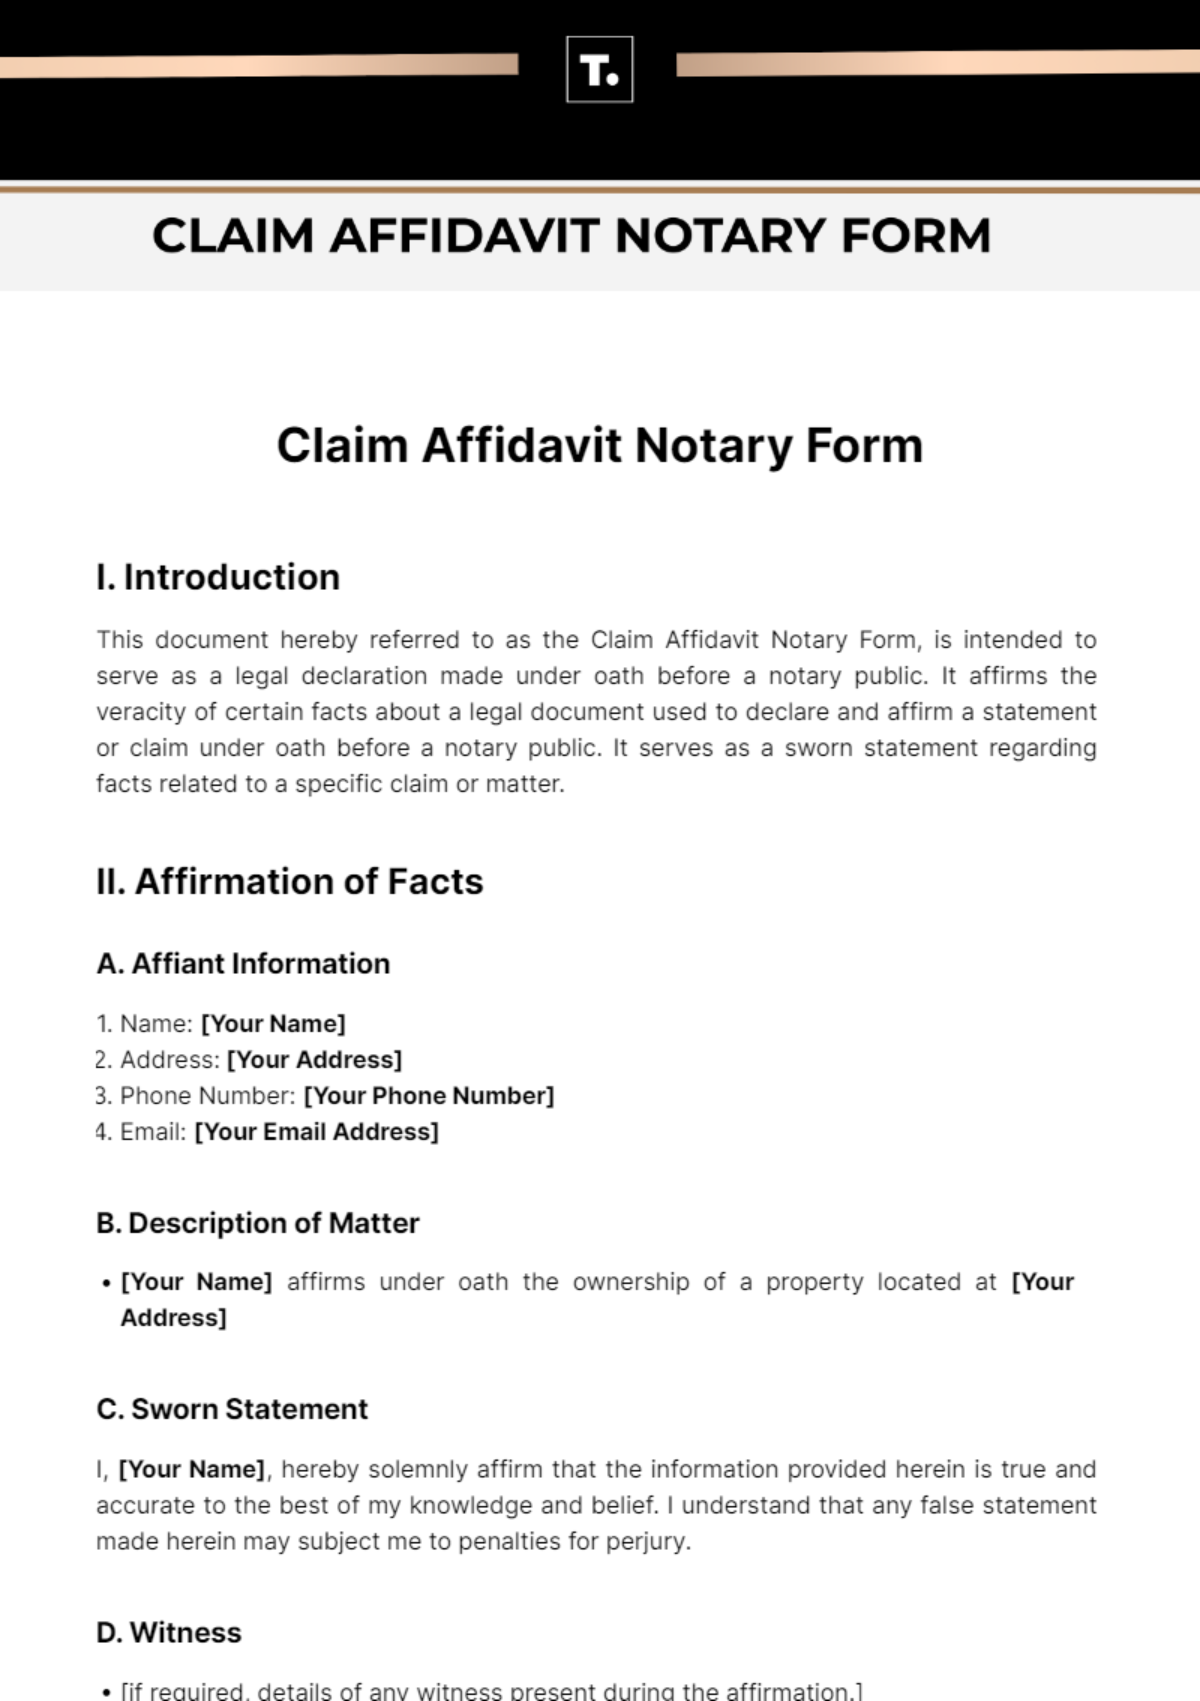 Claim Affidavit Notary Form Template